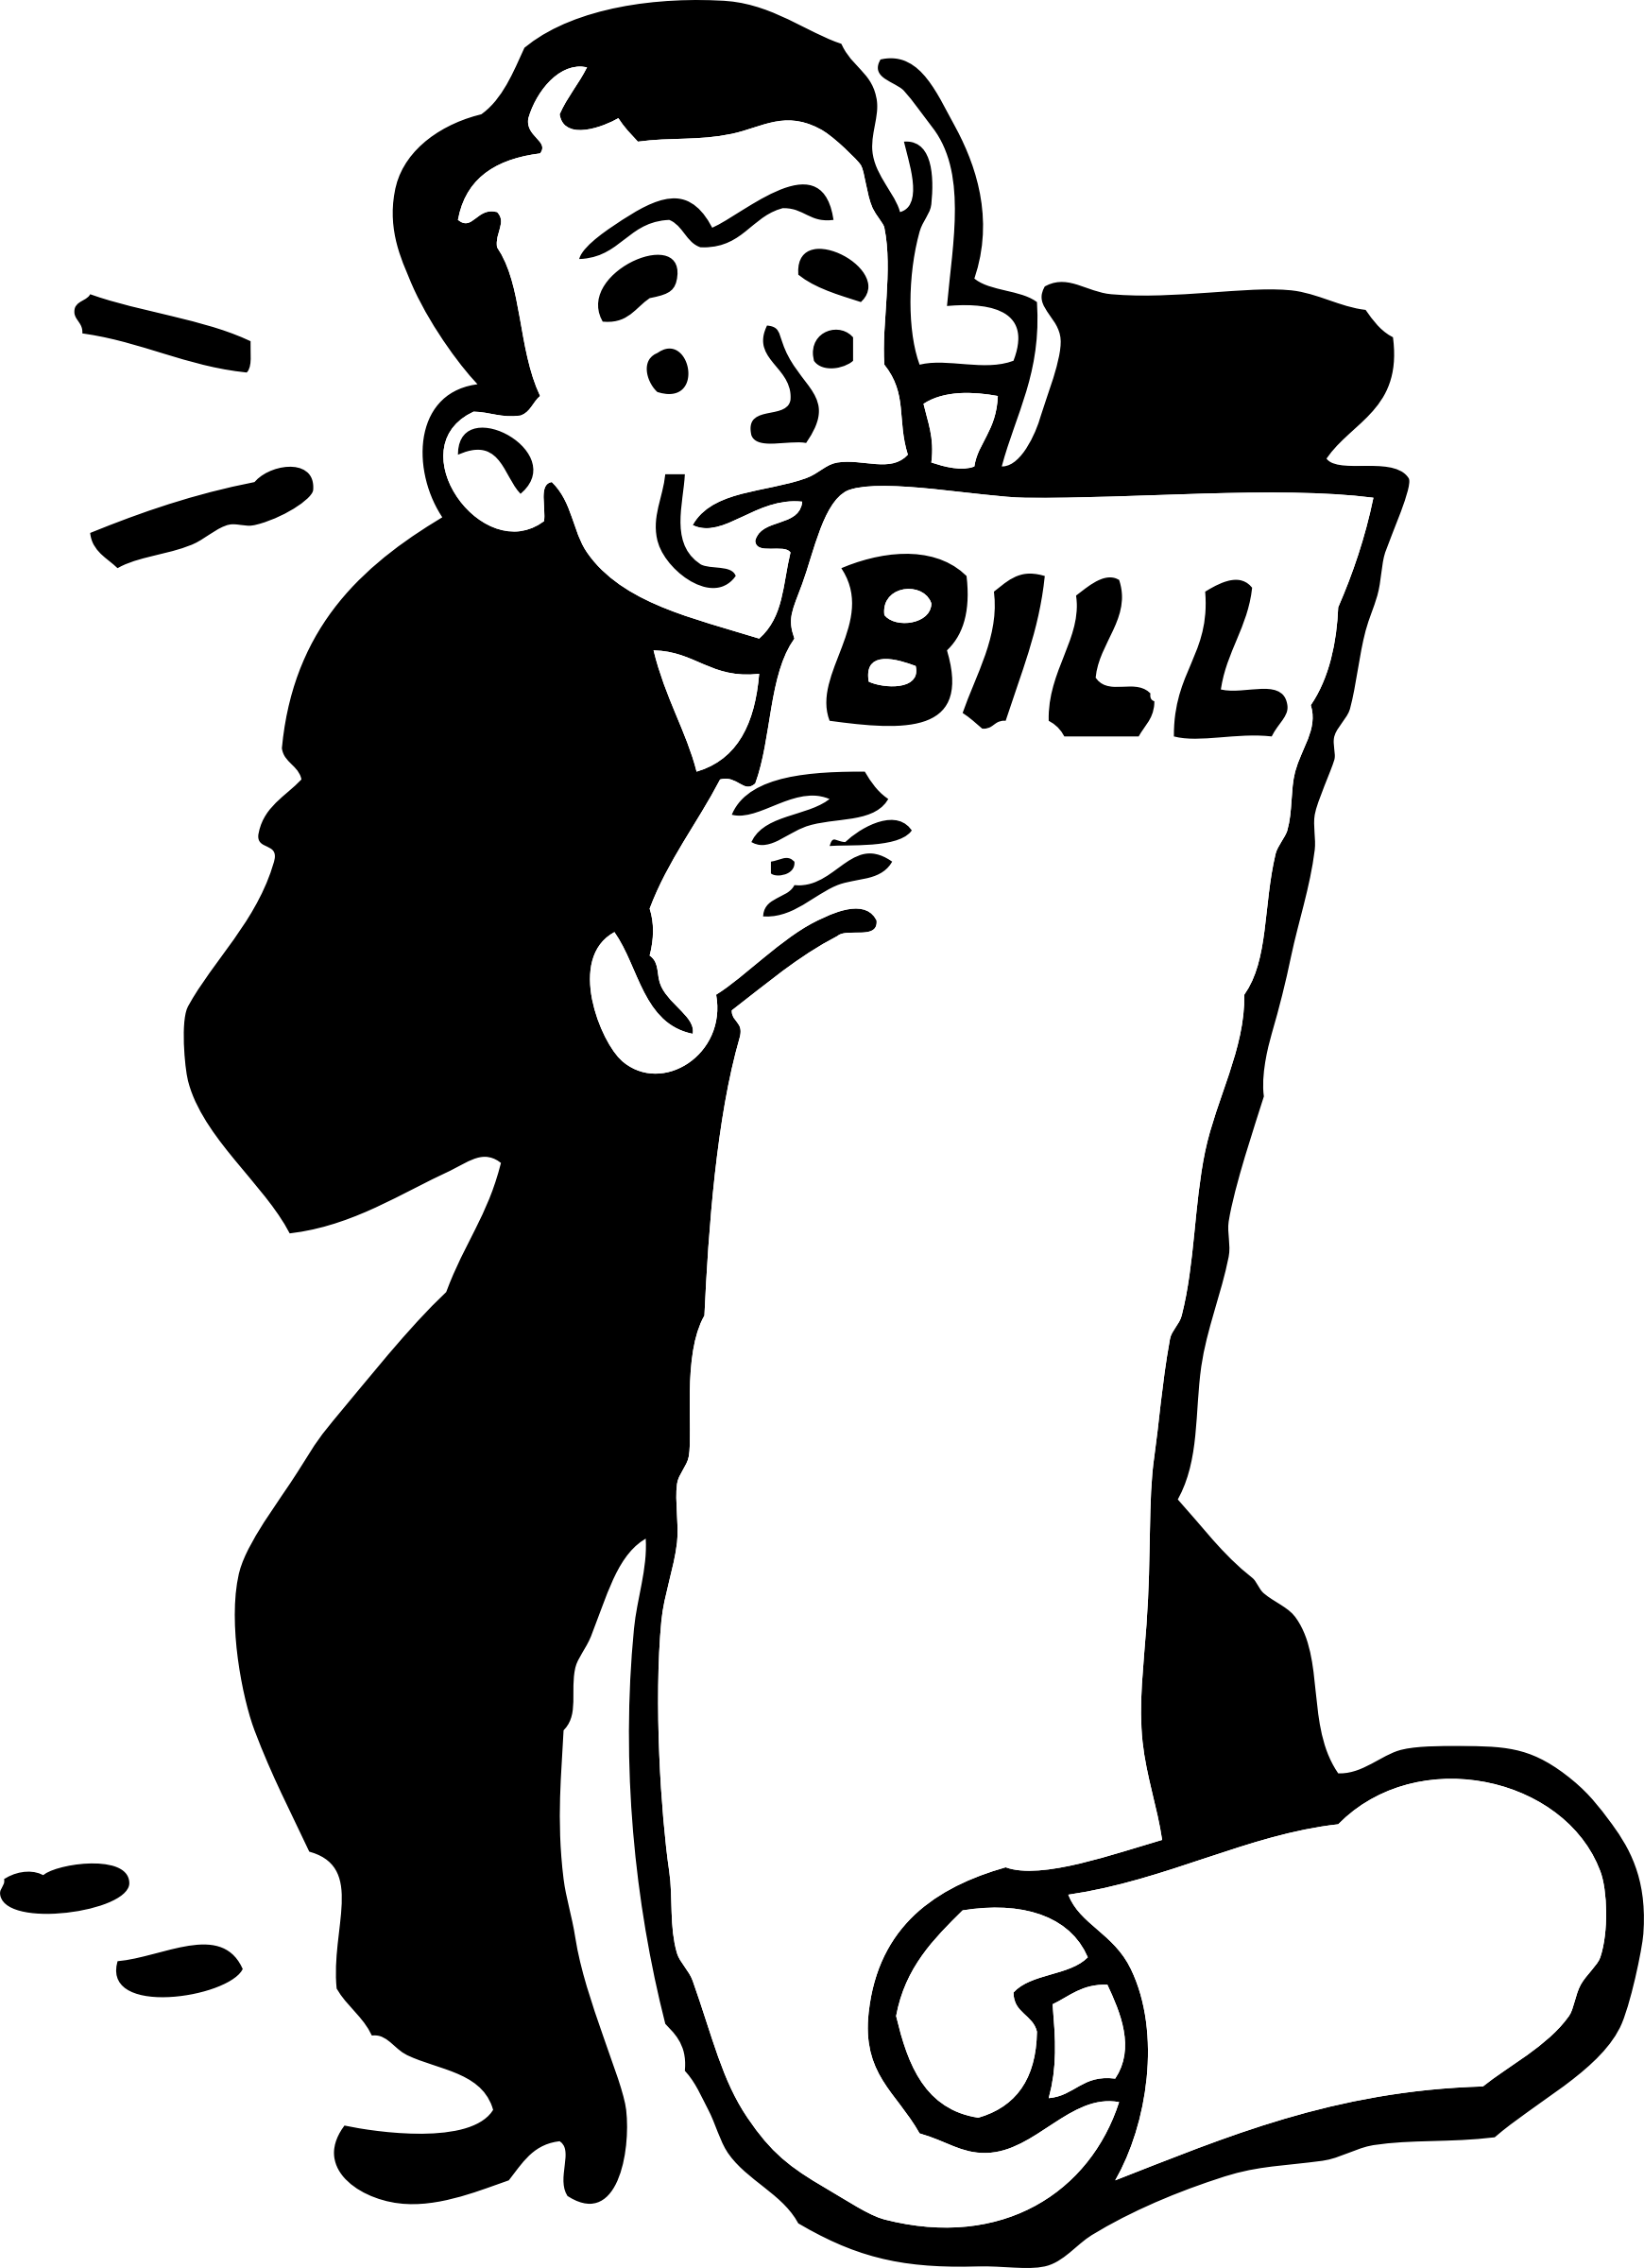 Goals clipart word. Worried about a bill